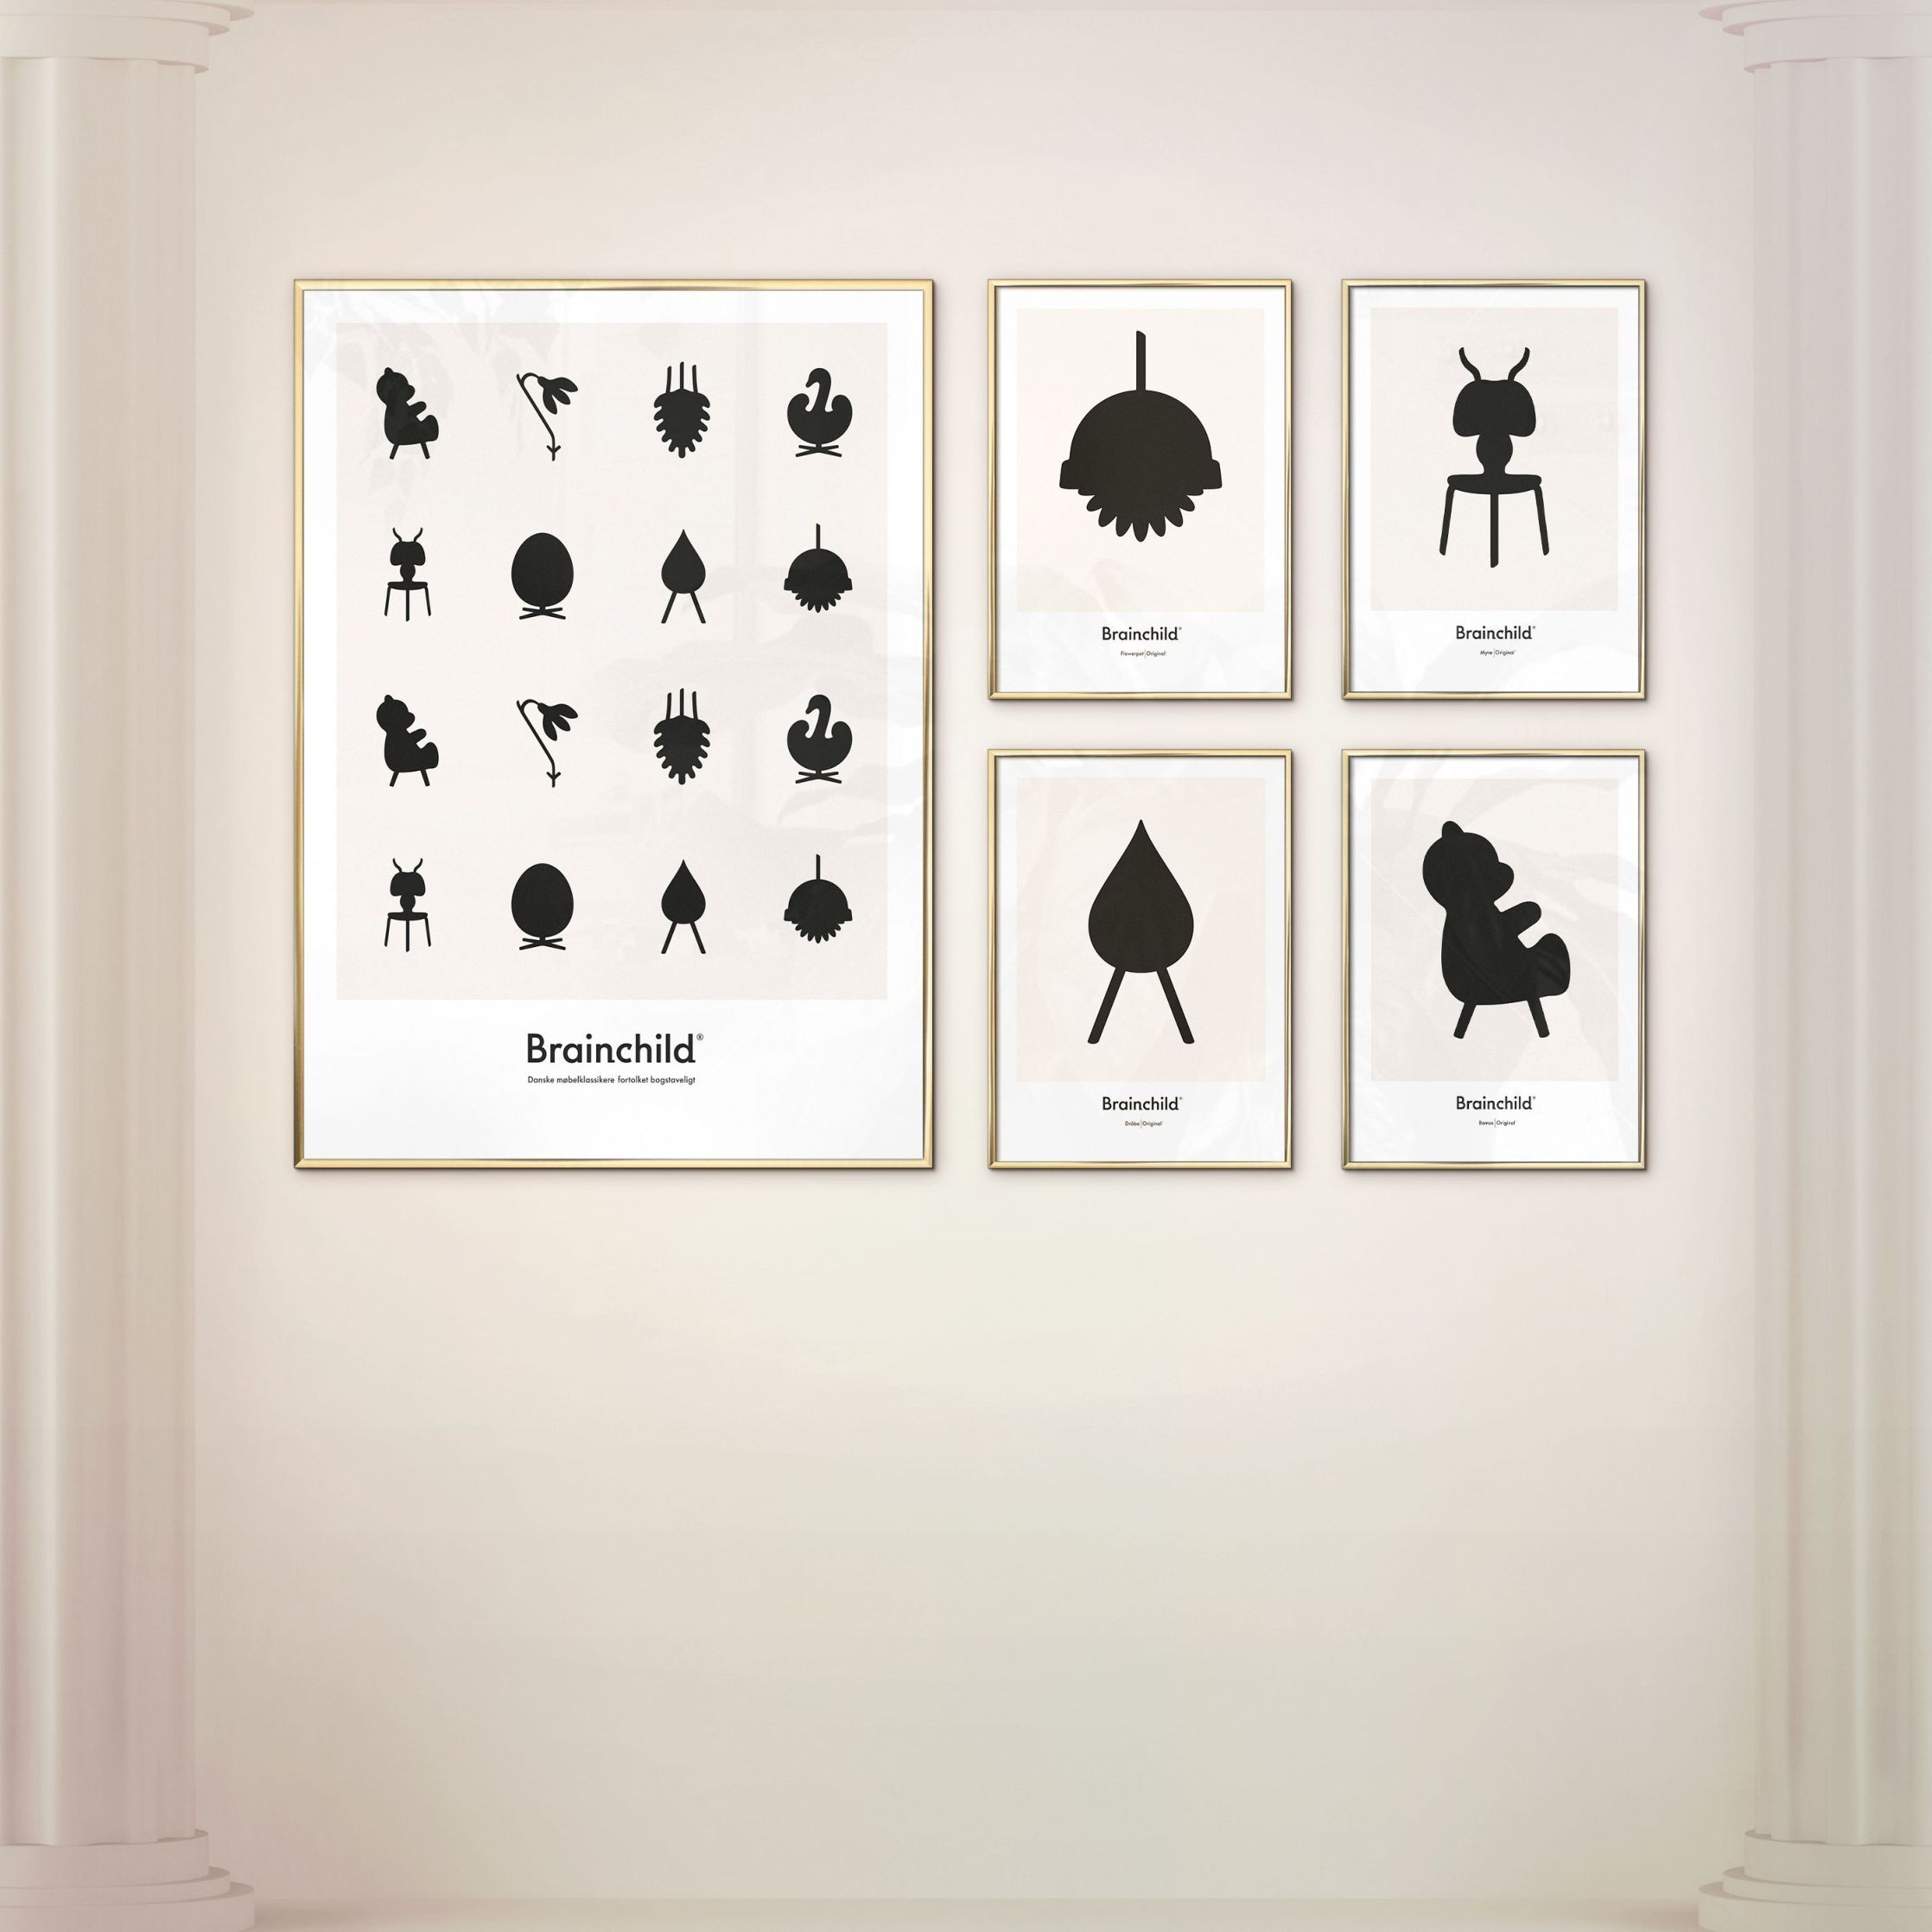 Brainchild Teddybär Design Icon Poster, Rahmen aus dunklem Holz 50x70 Cm, Grau